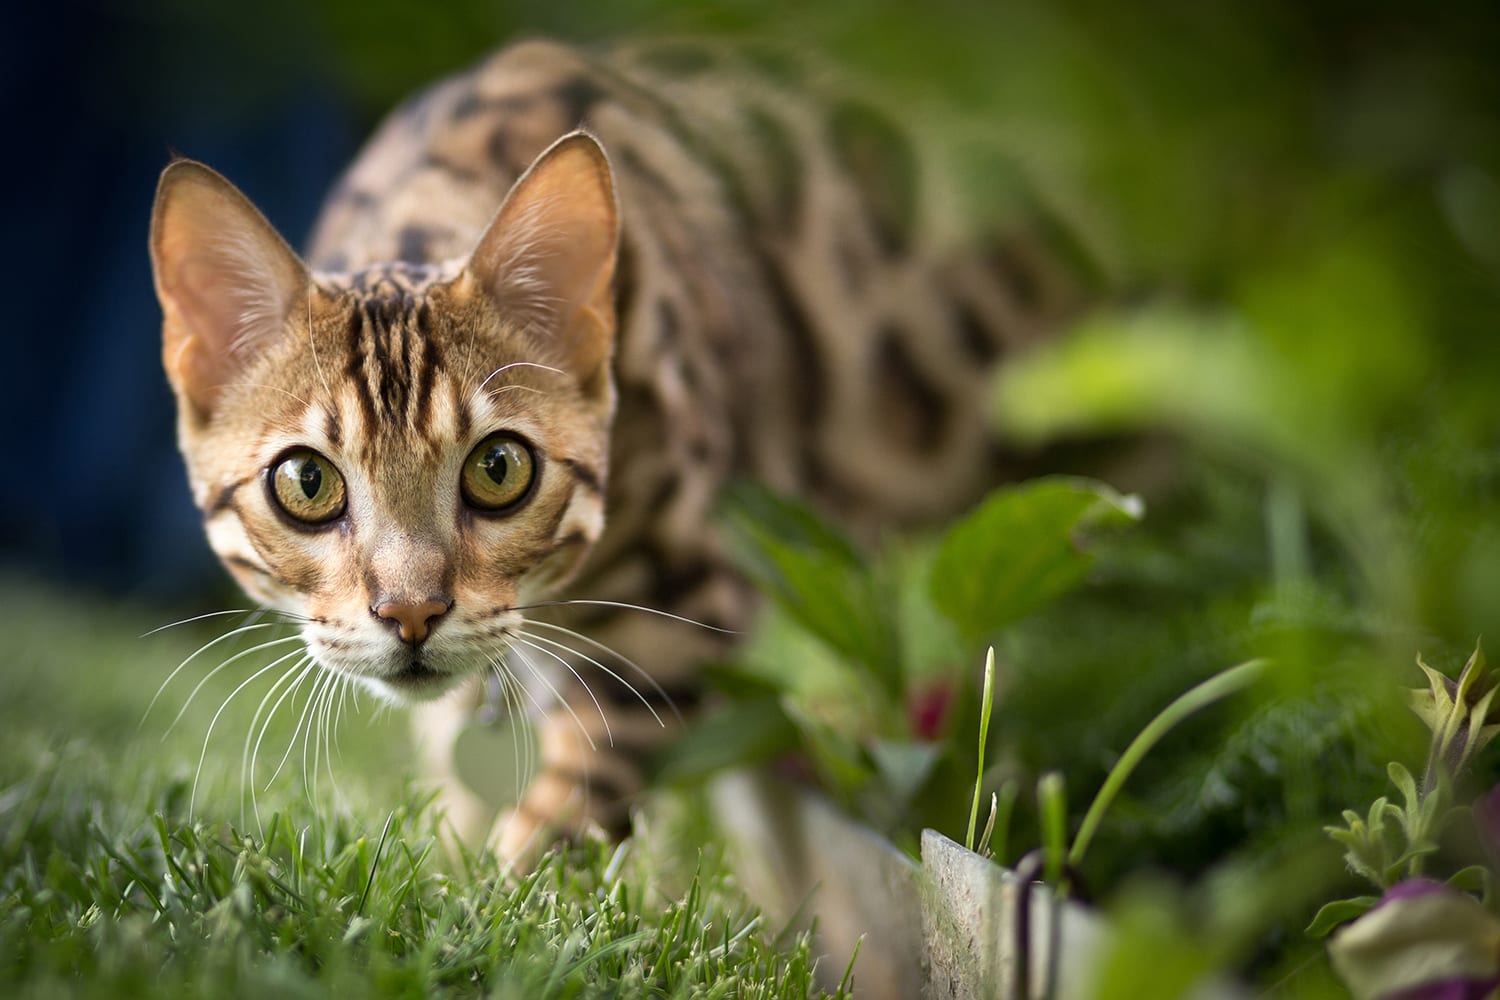 Bengal cat, walking through garden, looking into camera.